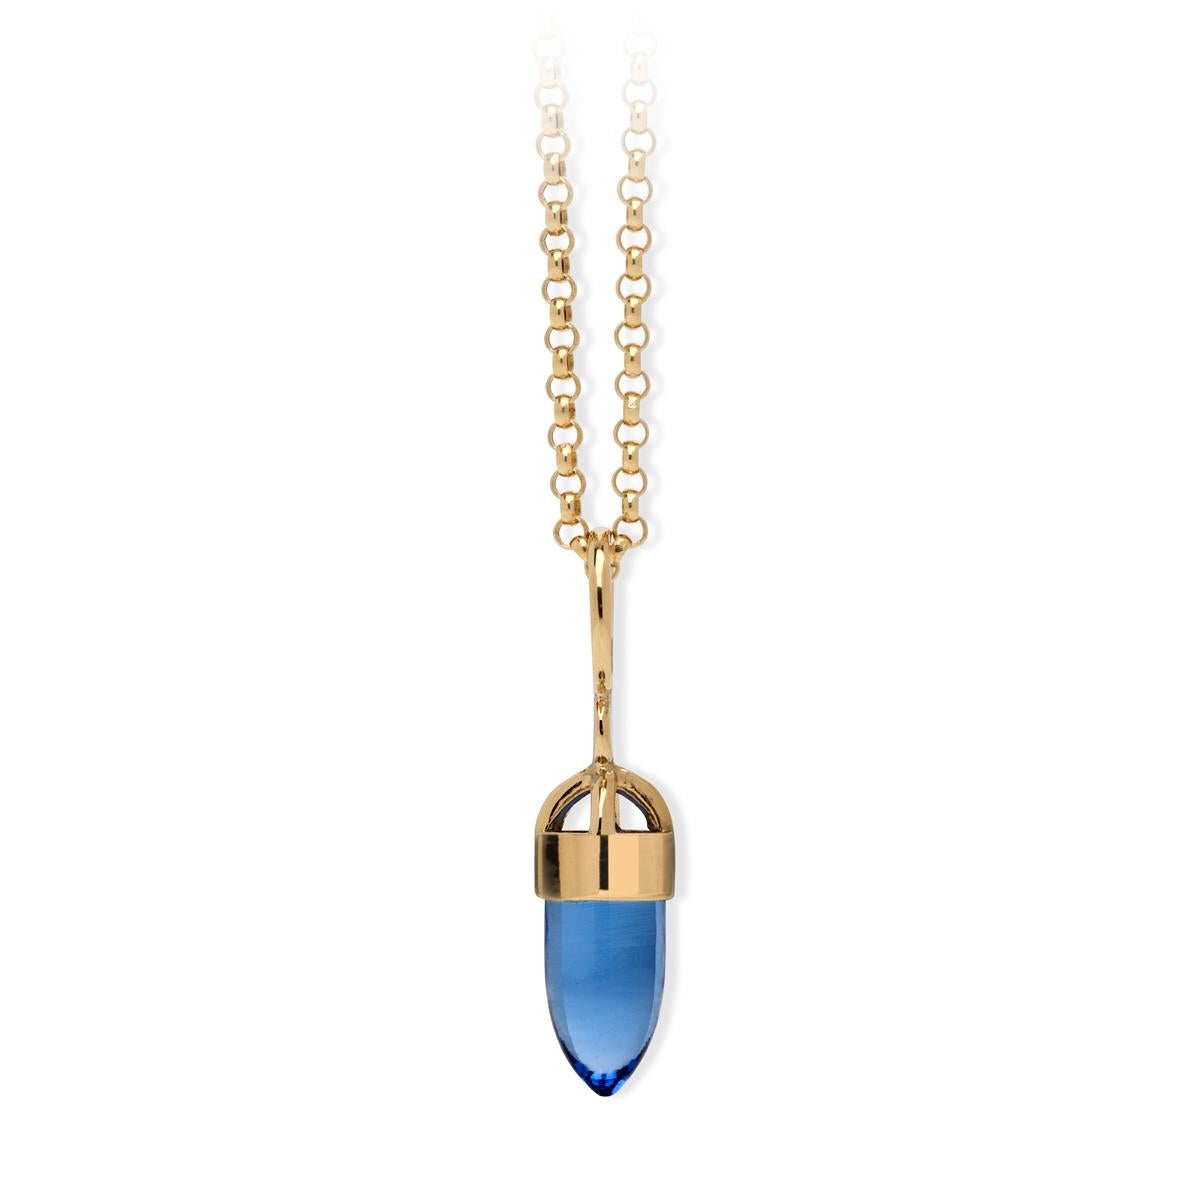 Colour stone modern Blue stone Quartz 18 kt Yellow solid Gold Pendant necklace  5